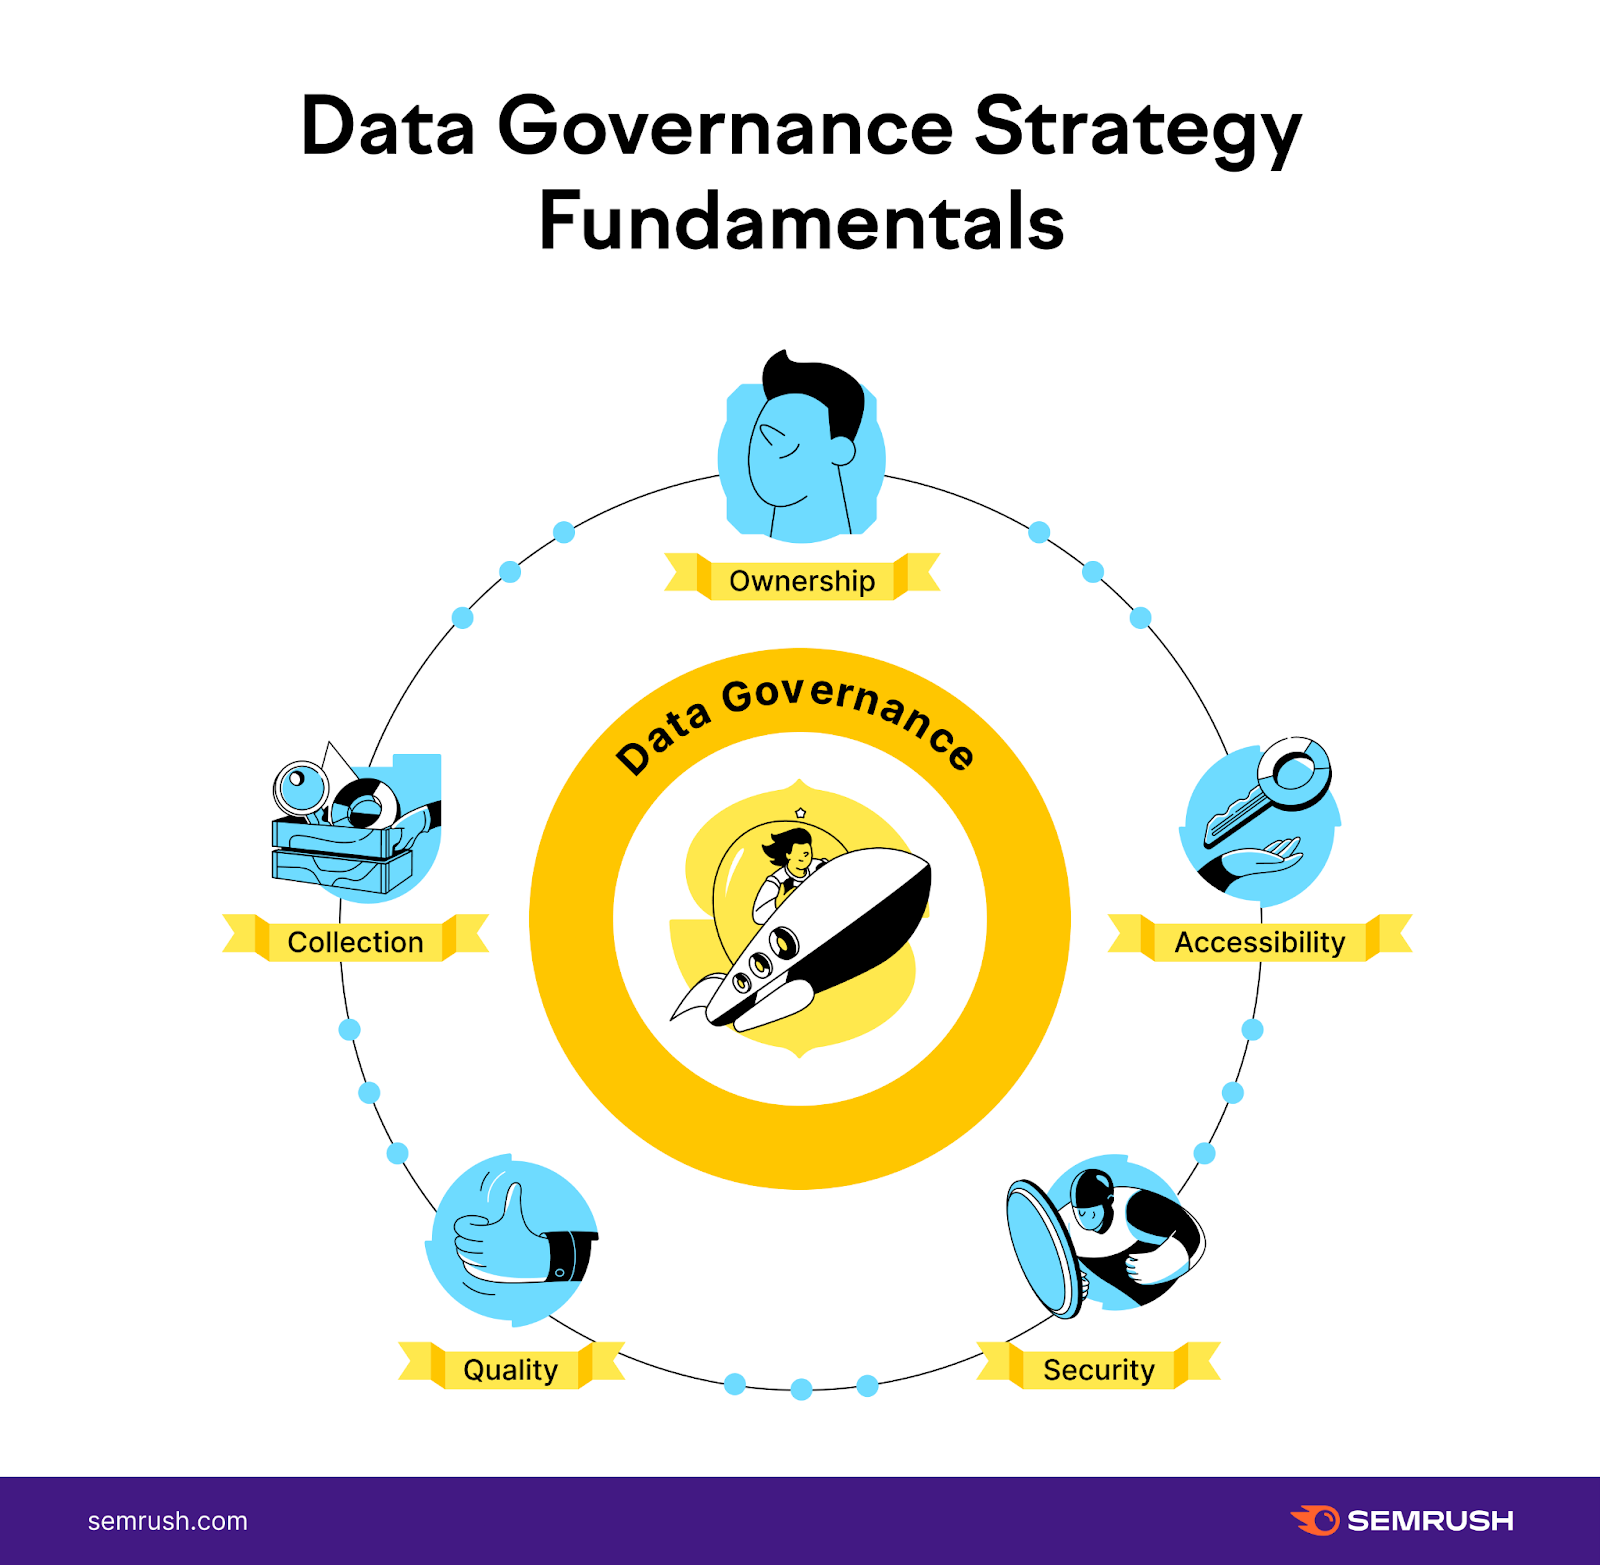 Data governance strategy fundamentals